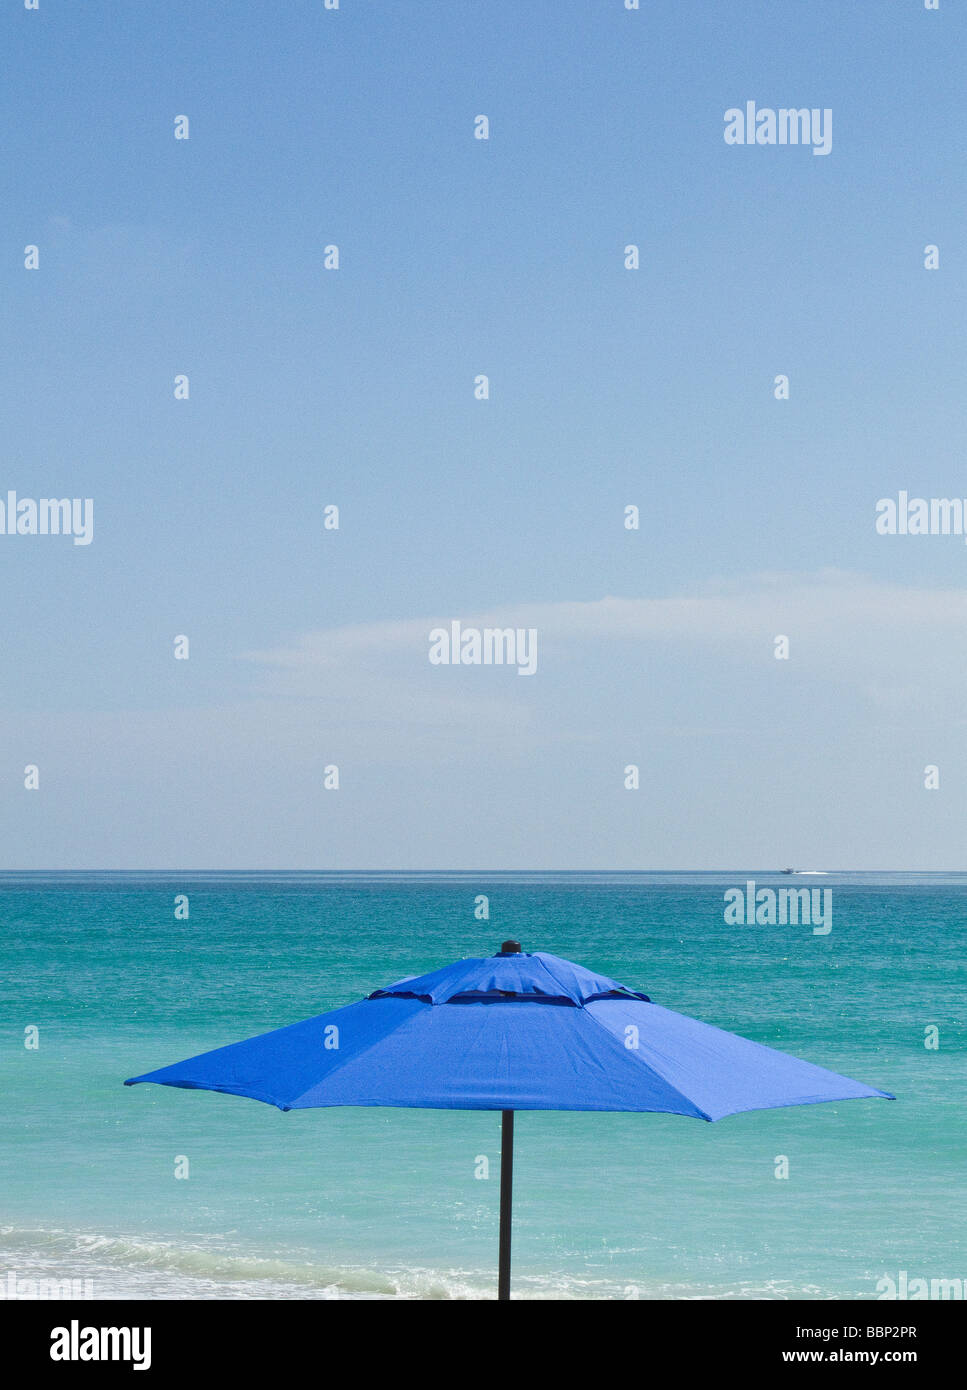 beach umbrella vacation summer ocean coastal Florida blue shade sun shelter water aqua sky protection under Stock Photo